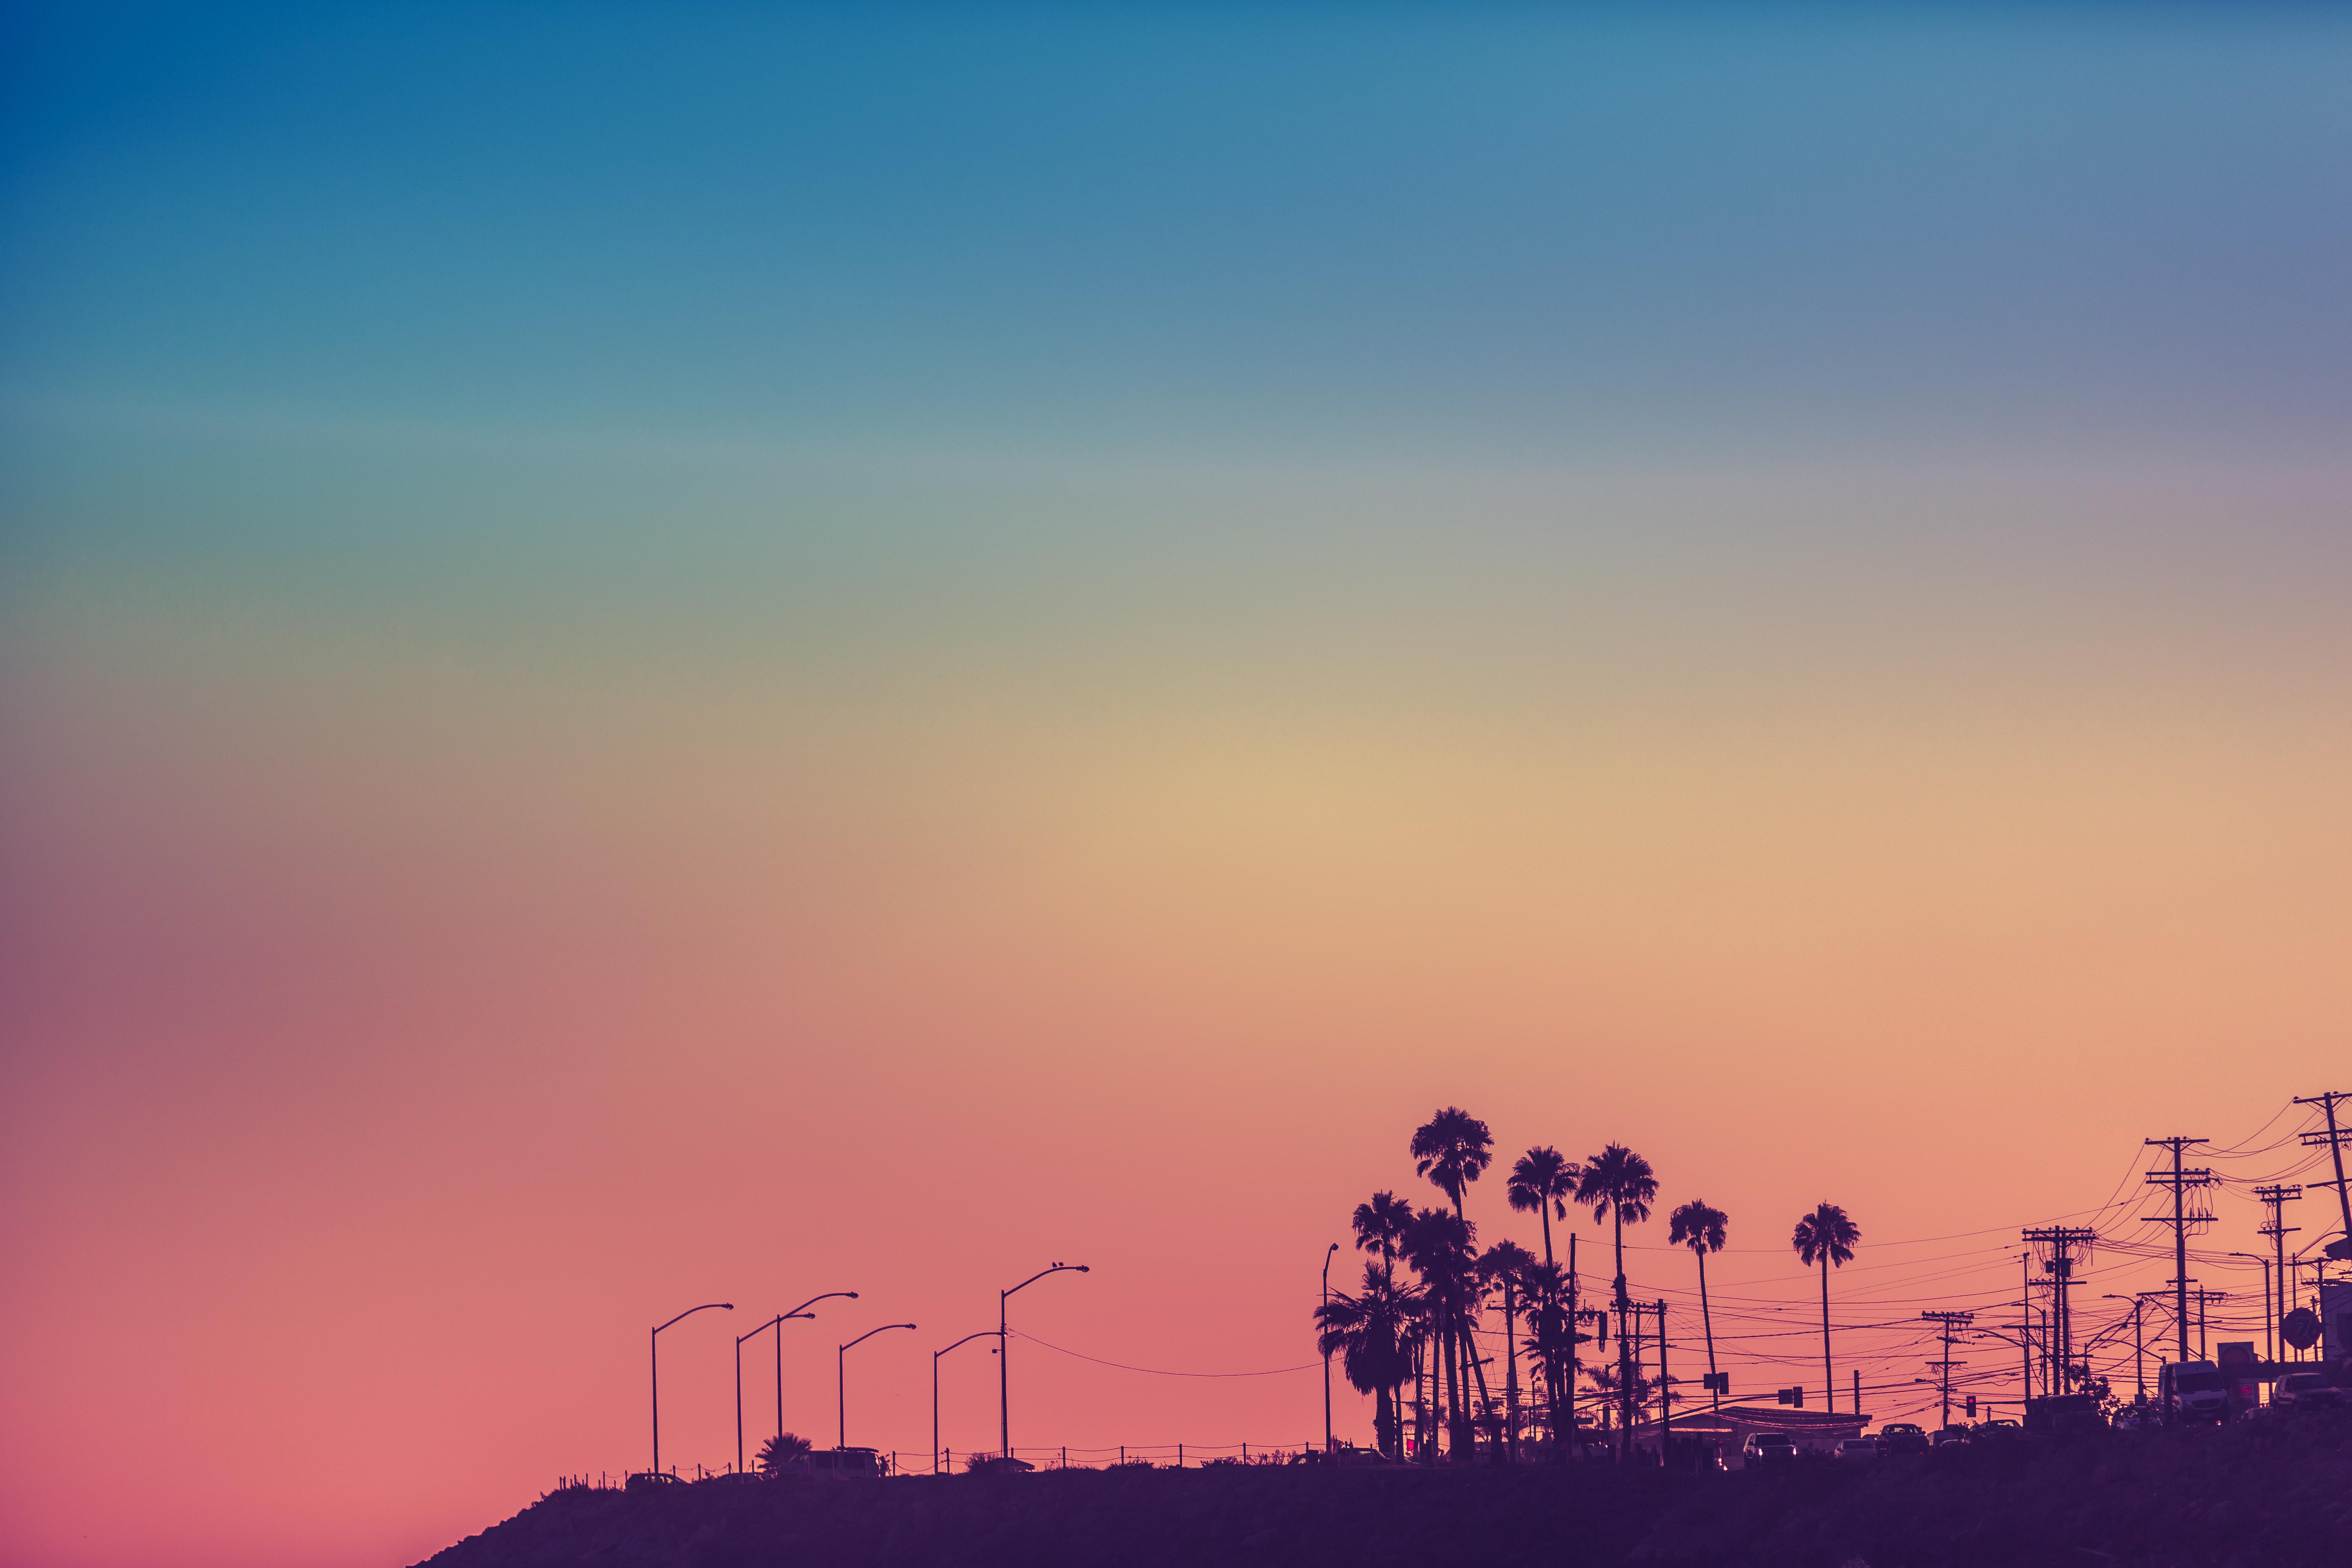 Los Angeles, California at Sunset [5760 x 3840]